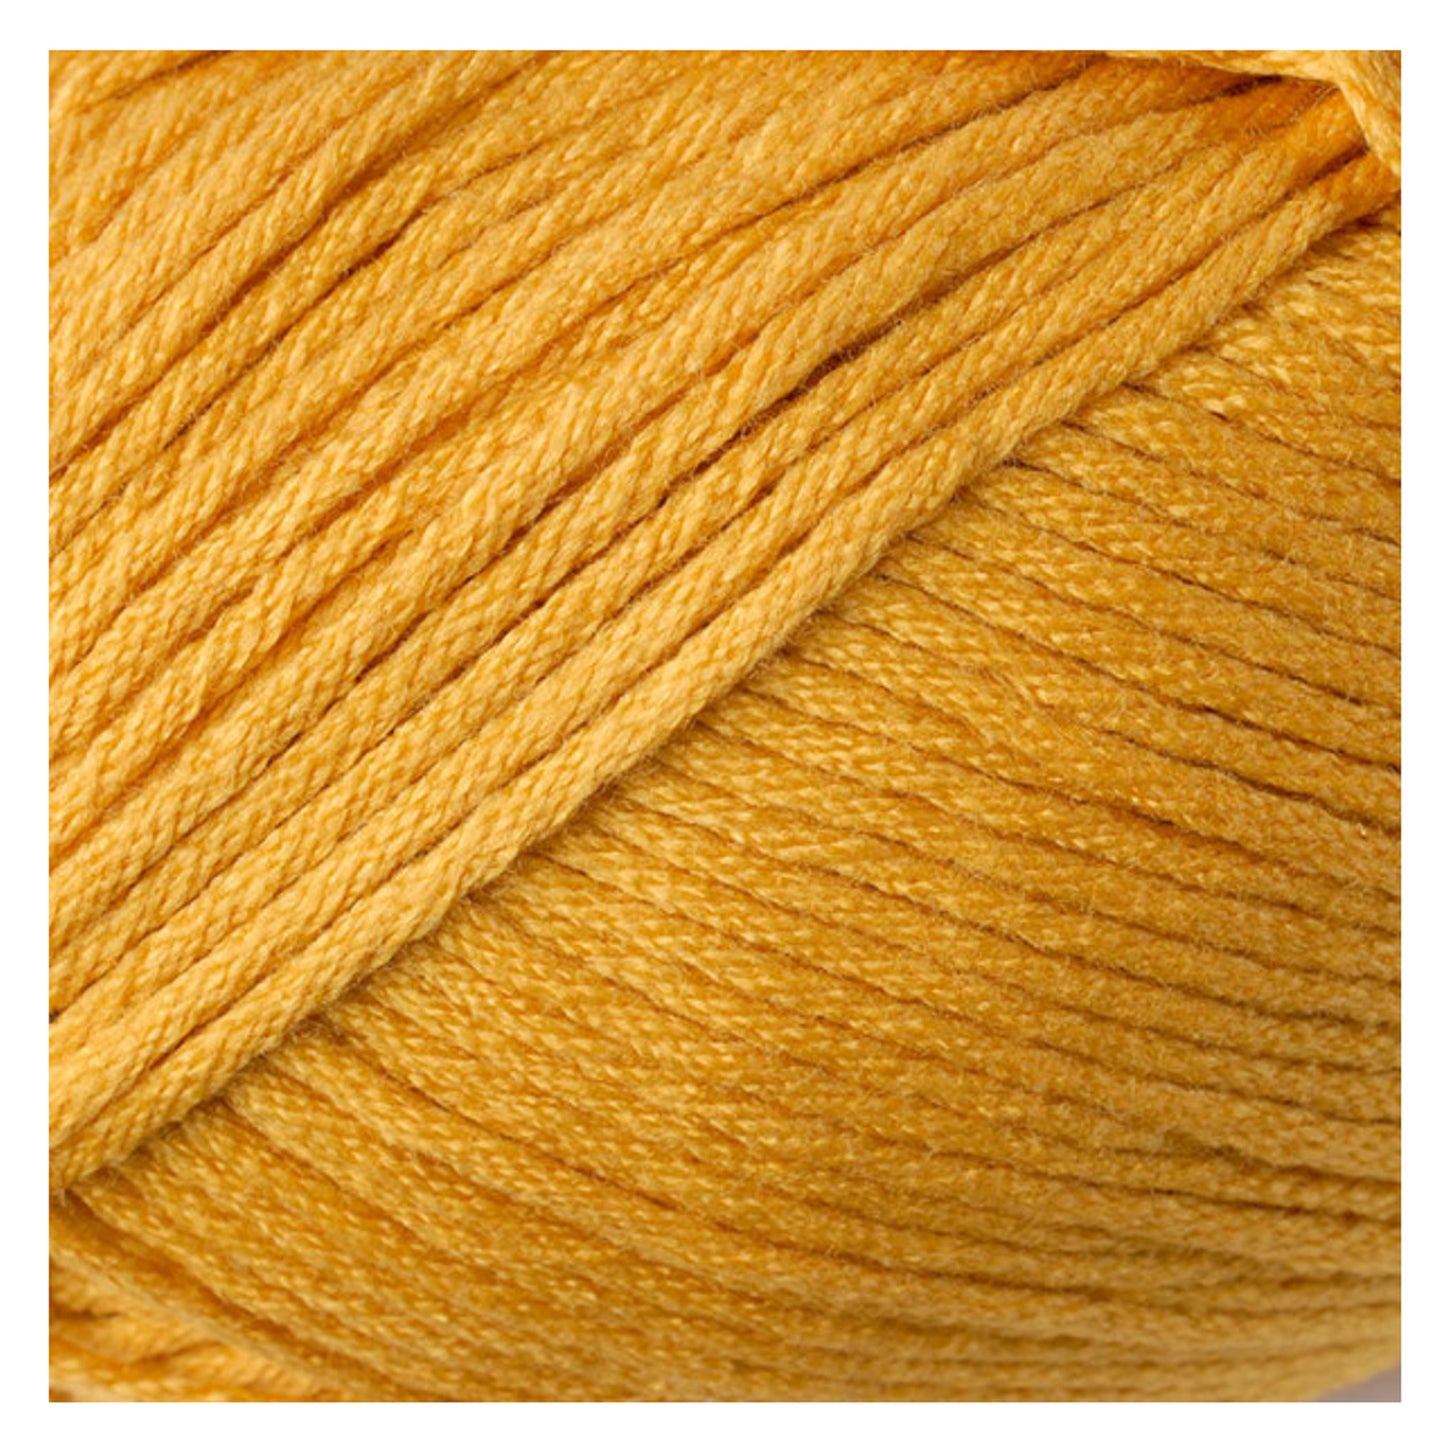 Colorful Crochet Skirt/Cowl - XS/S/M - Dream Color Crochet Kit Alternative View #4